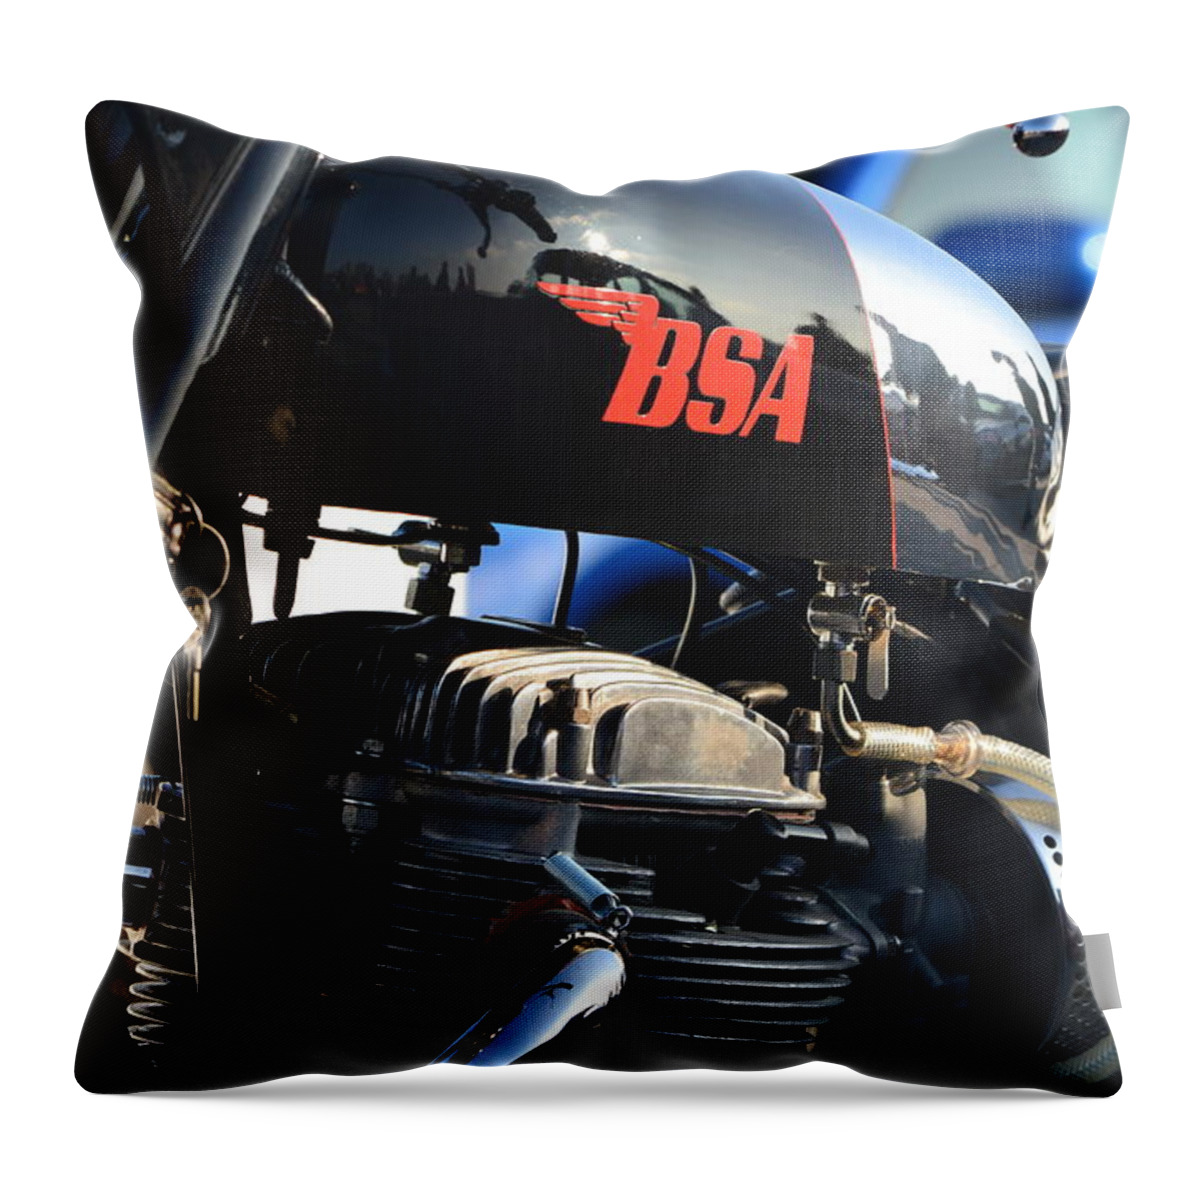  Throw Pillow featuring the photograph BSA by Dean Ferreira